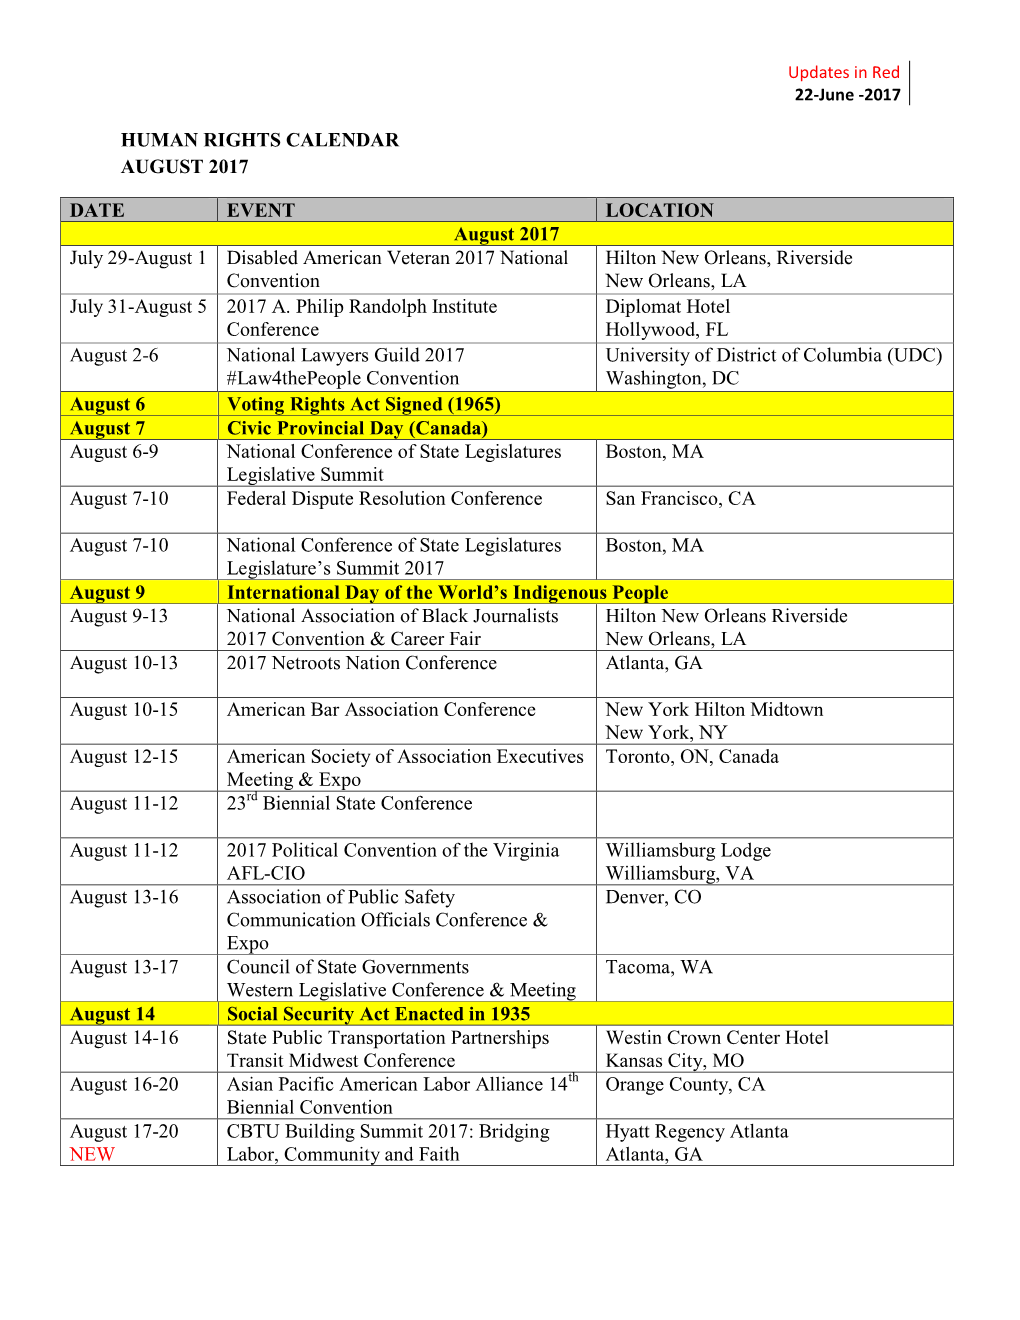 Human Rights Calendar August 2017 Date Event